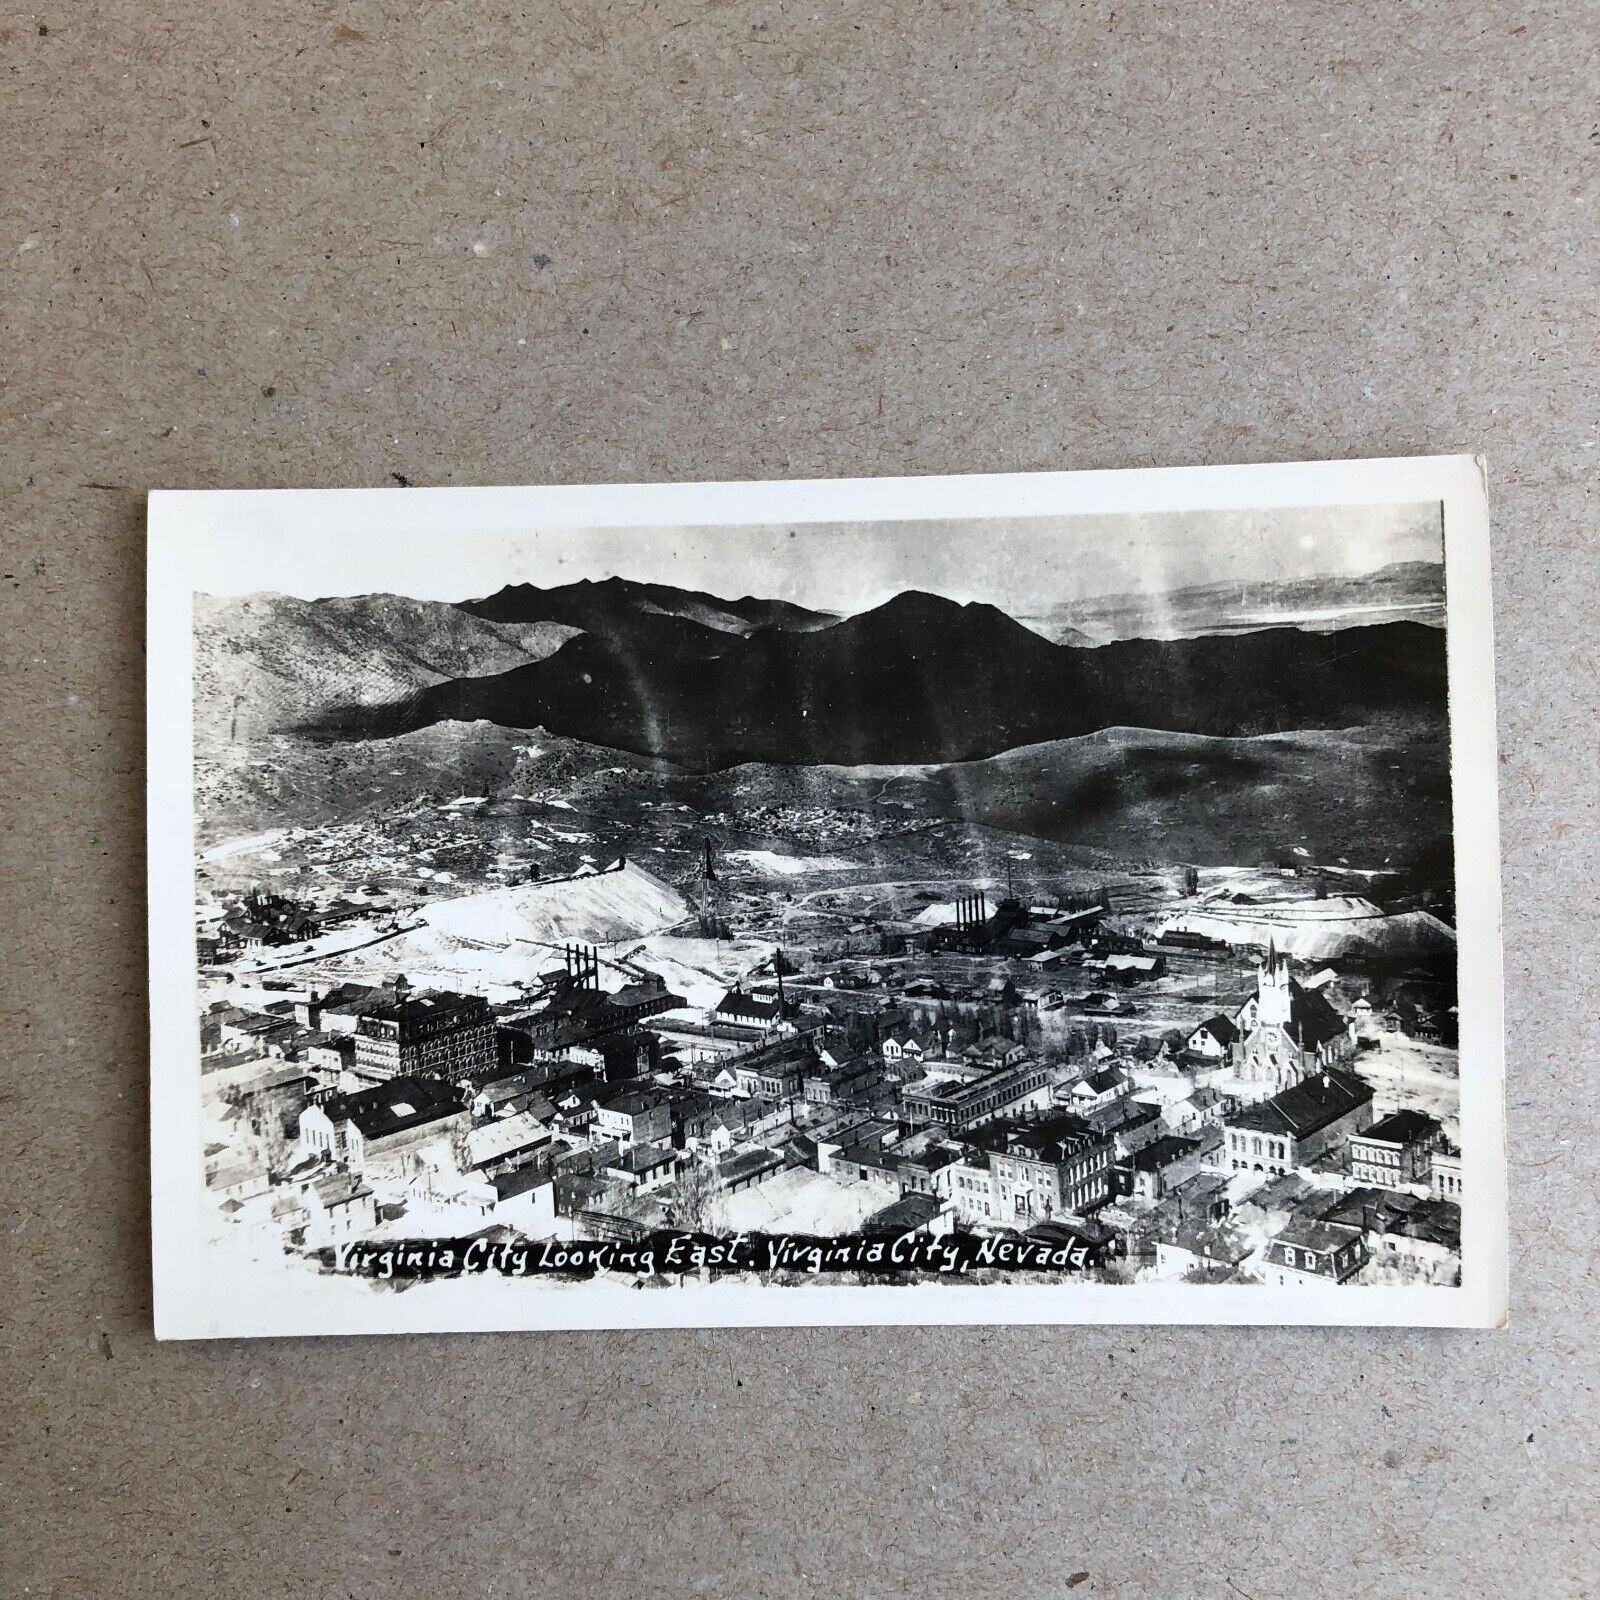 RPPC White Border Virginia City Nevada Ghost Town Aerial View Vintage Postcard T